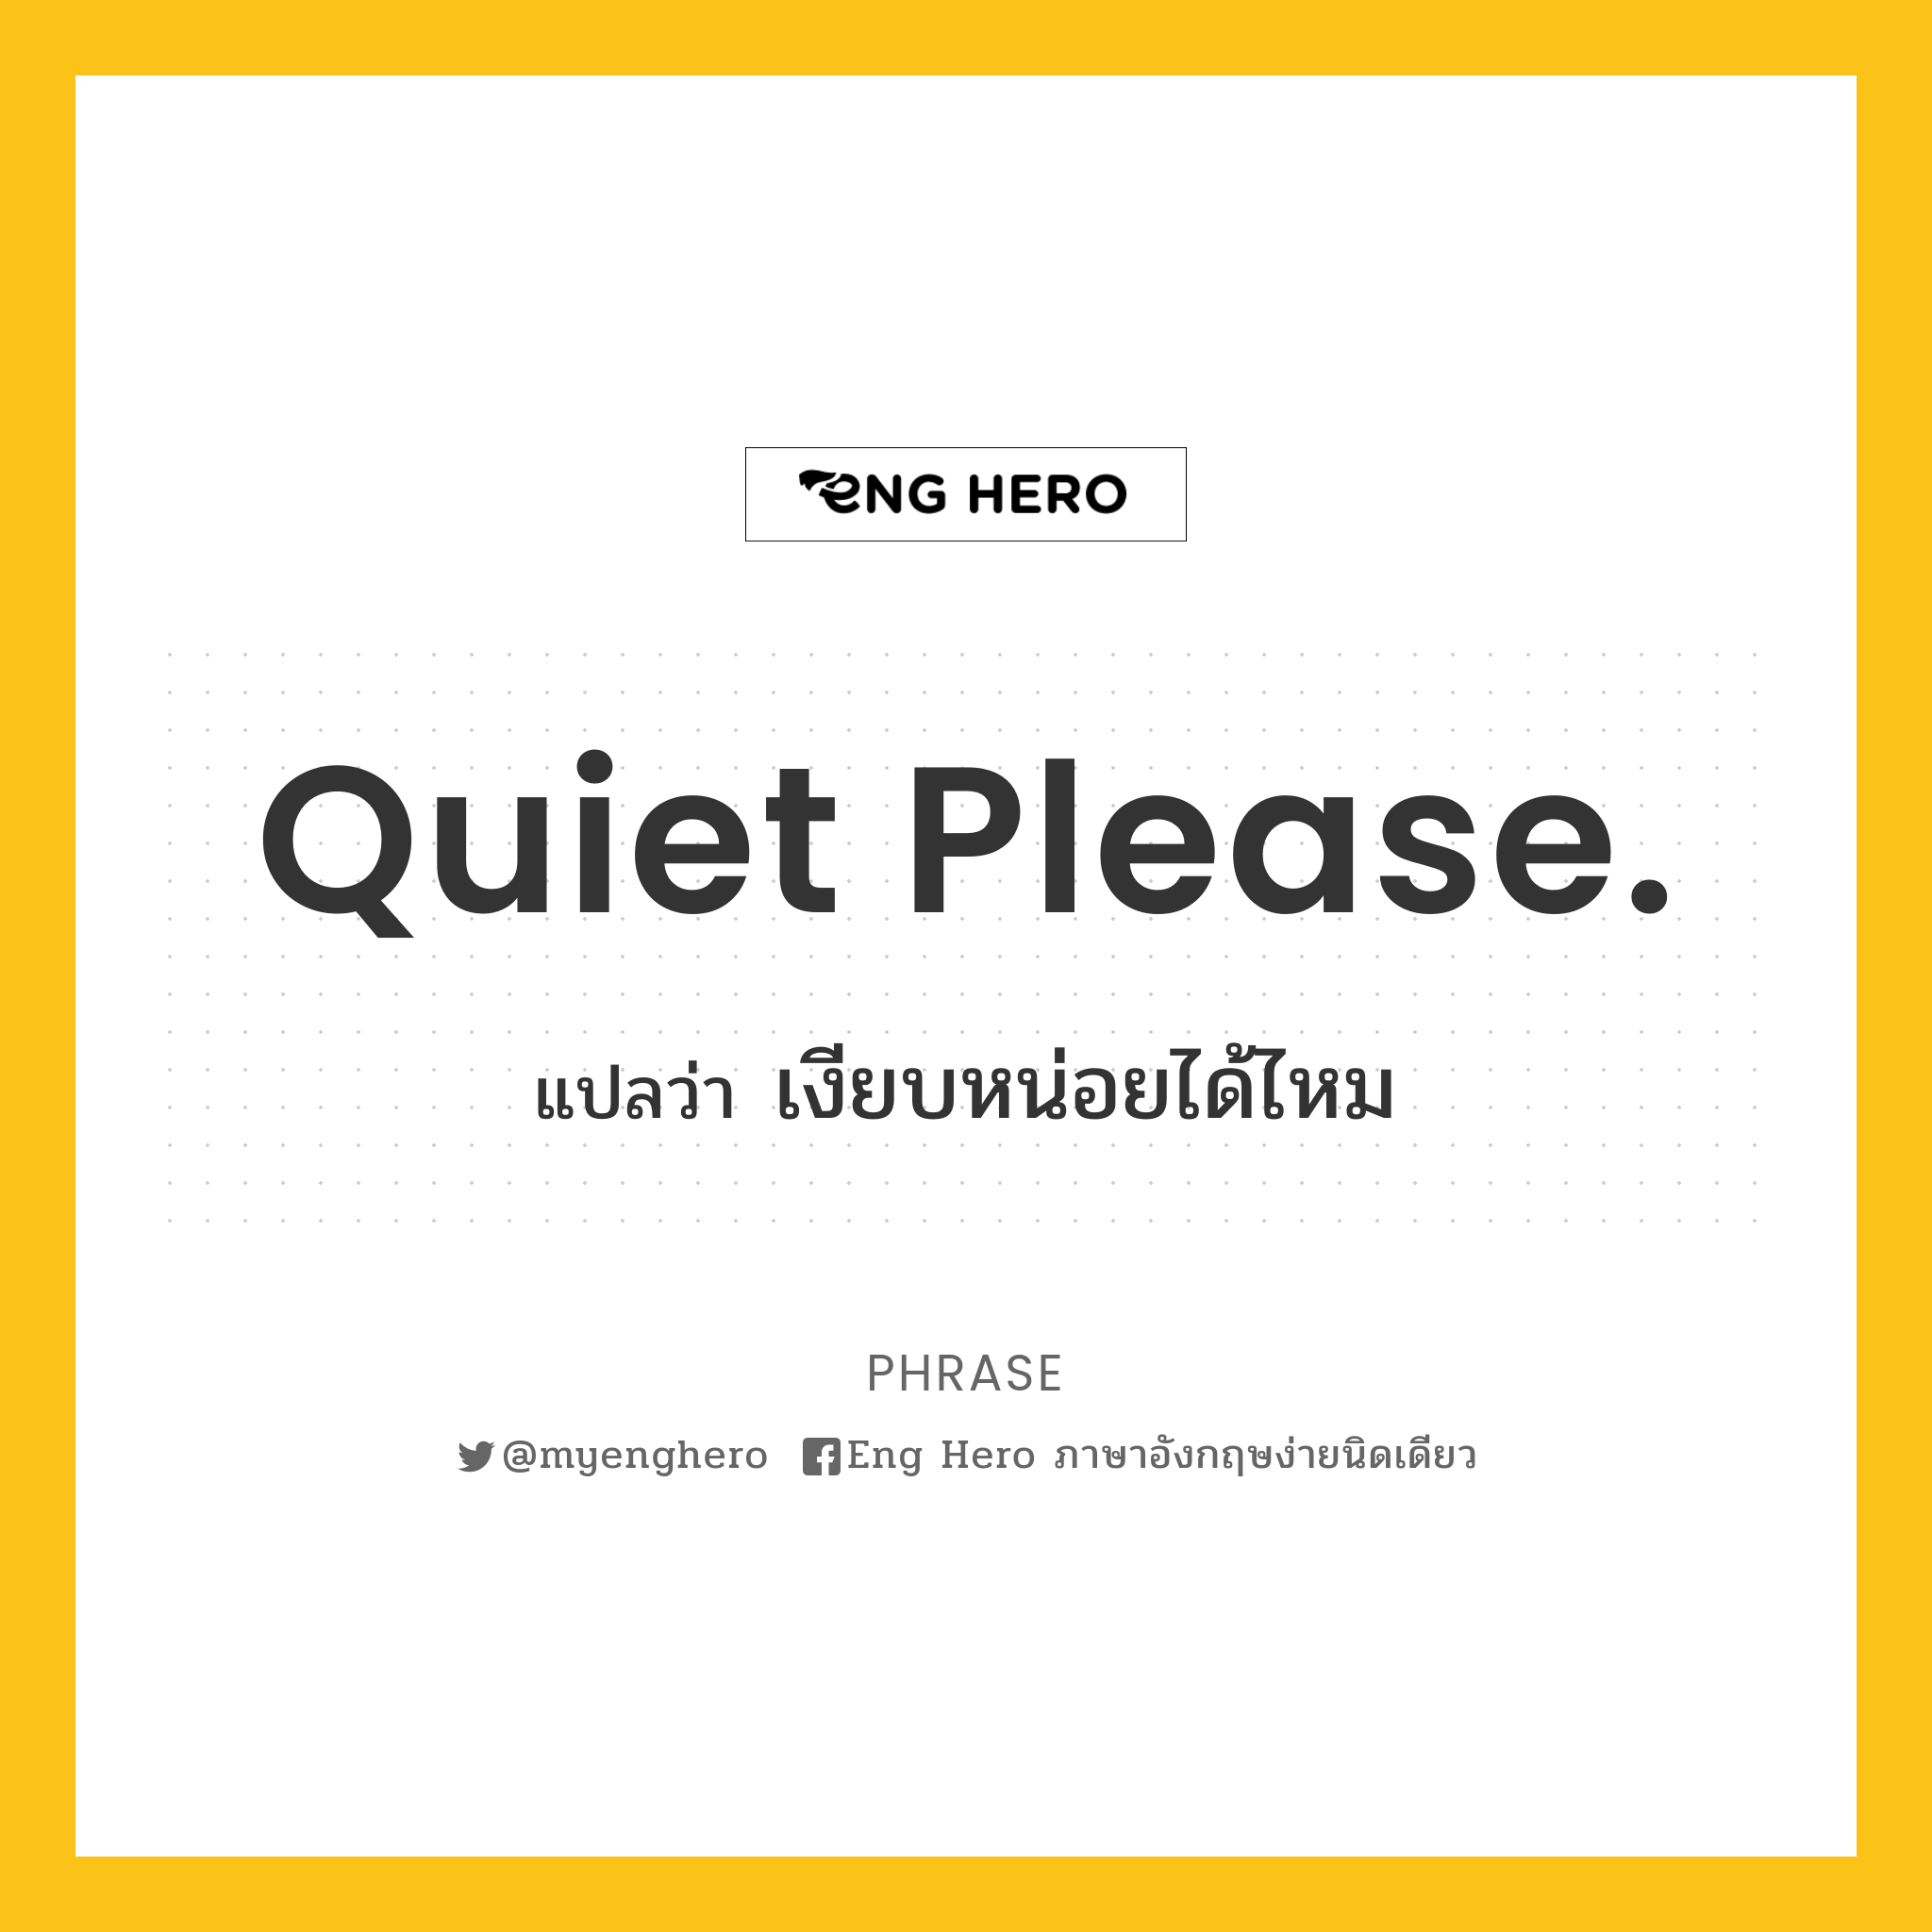 Quiet please.